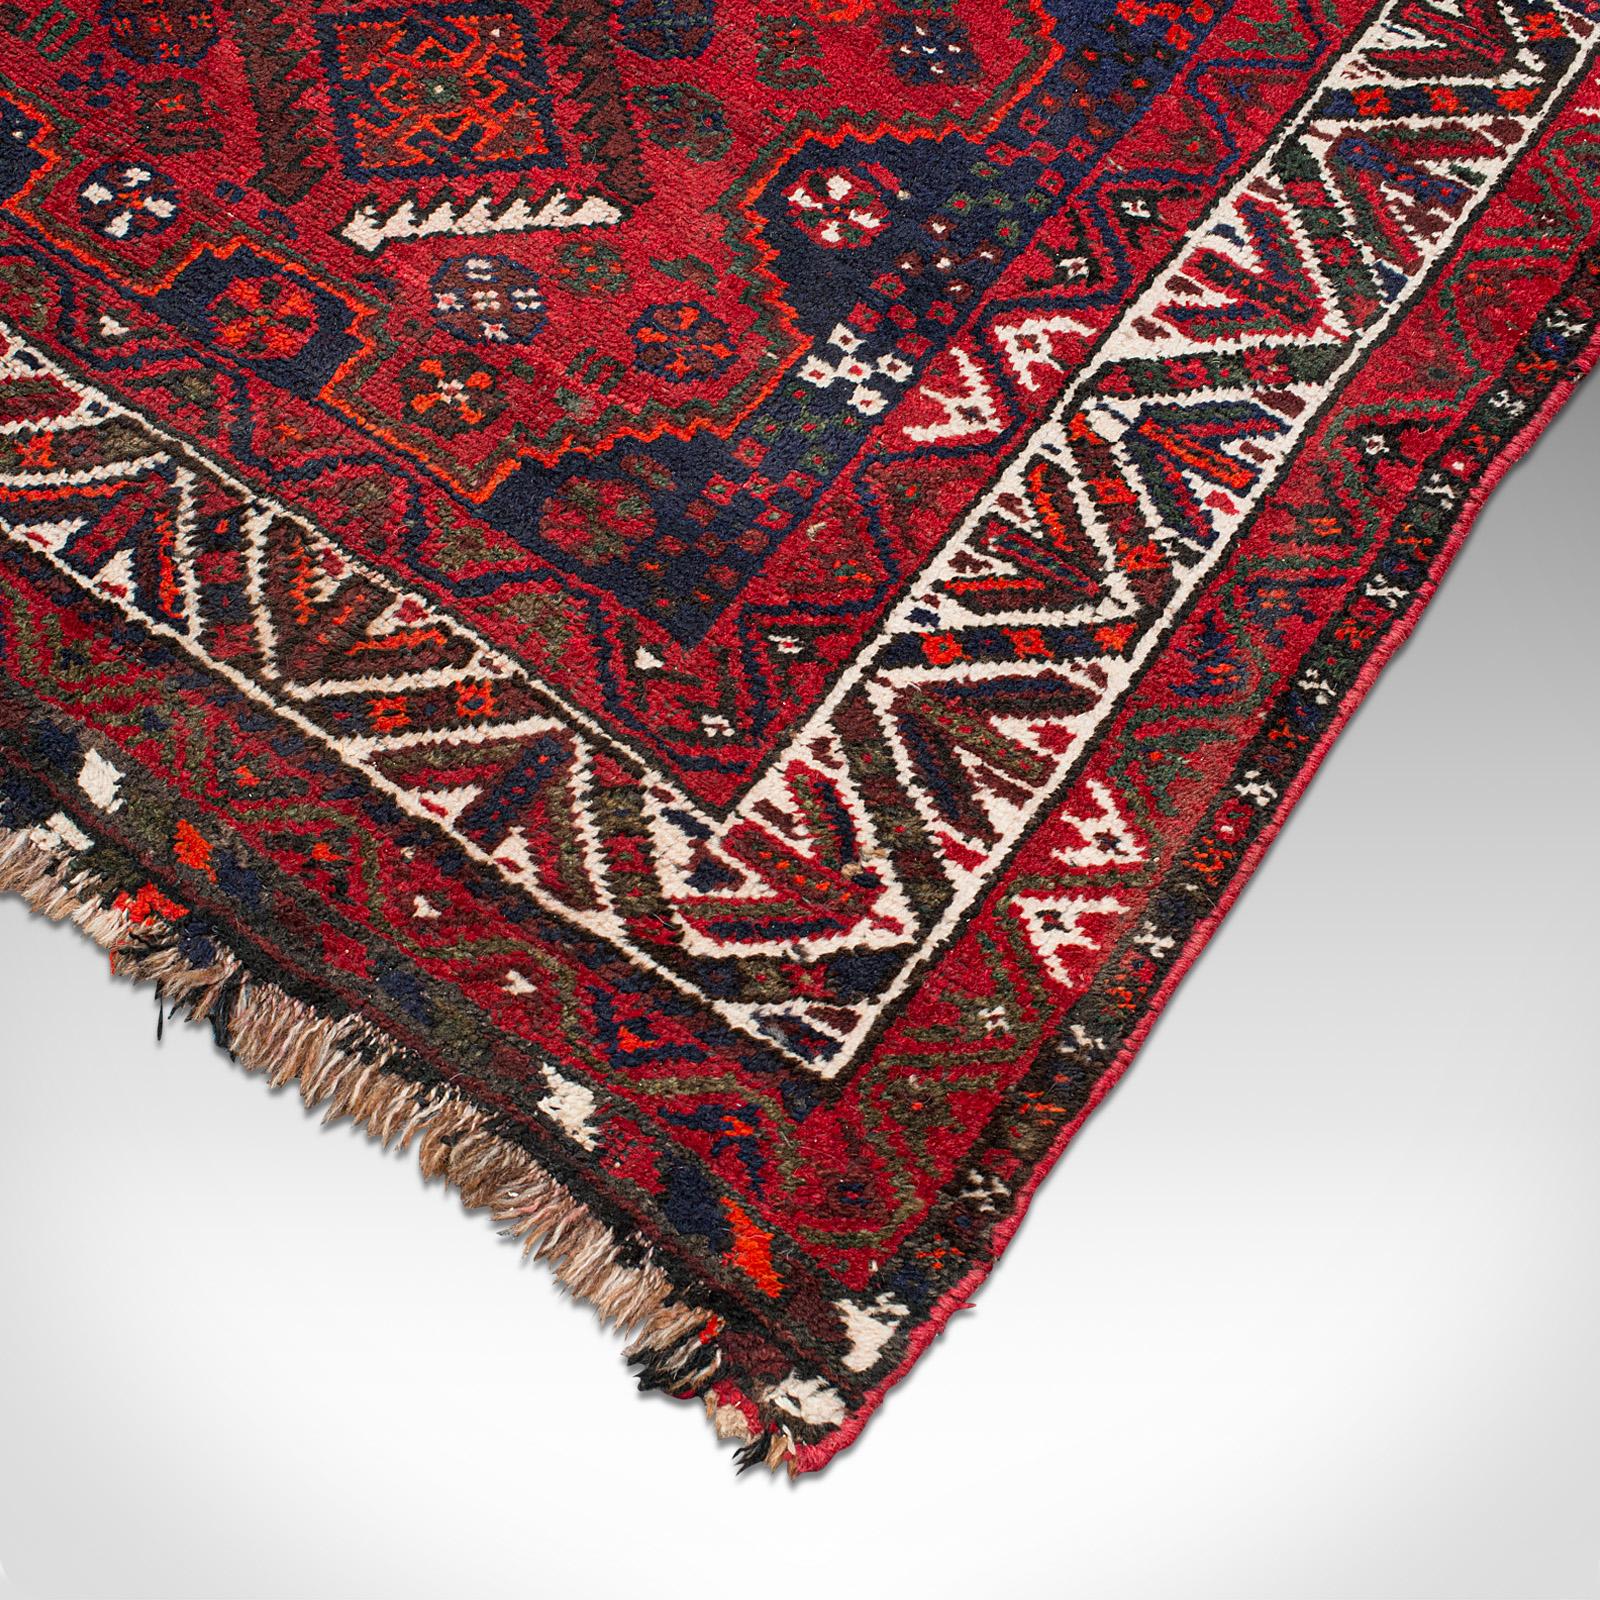 Antique Turkoman Carpet, Caucasian, Hand Woven, Lounge, Hallway, Rug, Circa 1900 For Sale 3